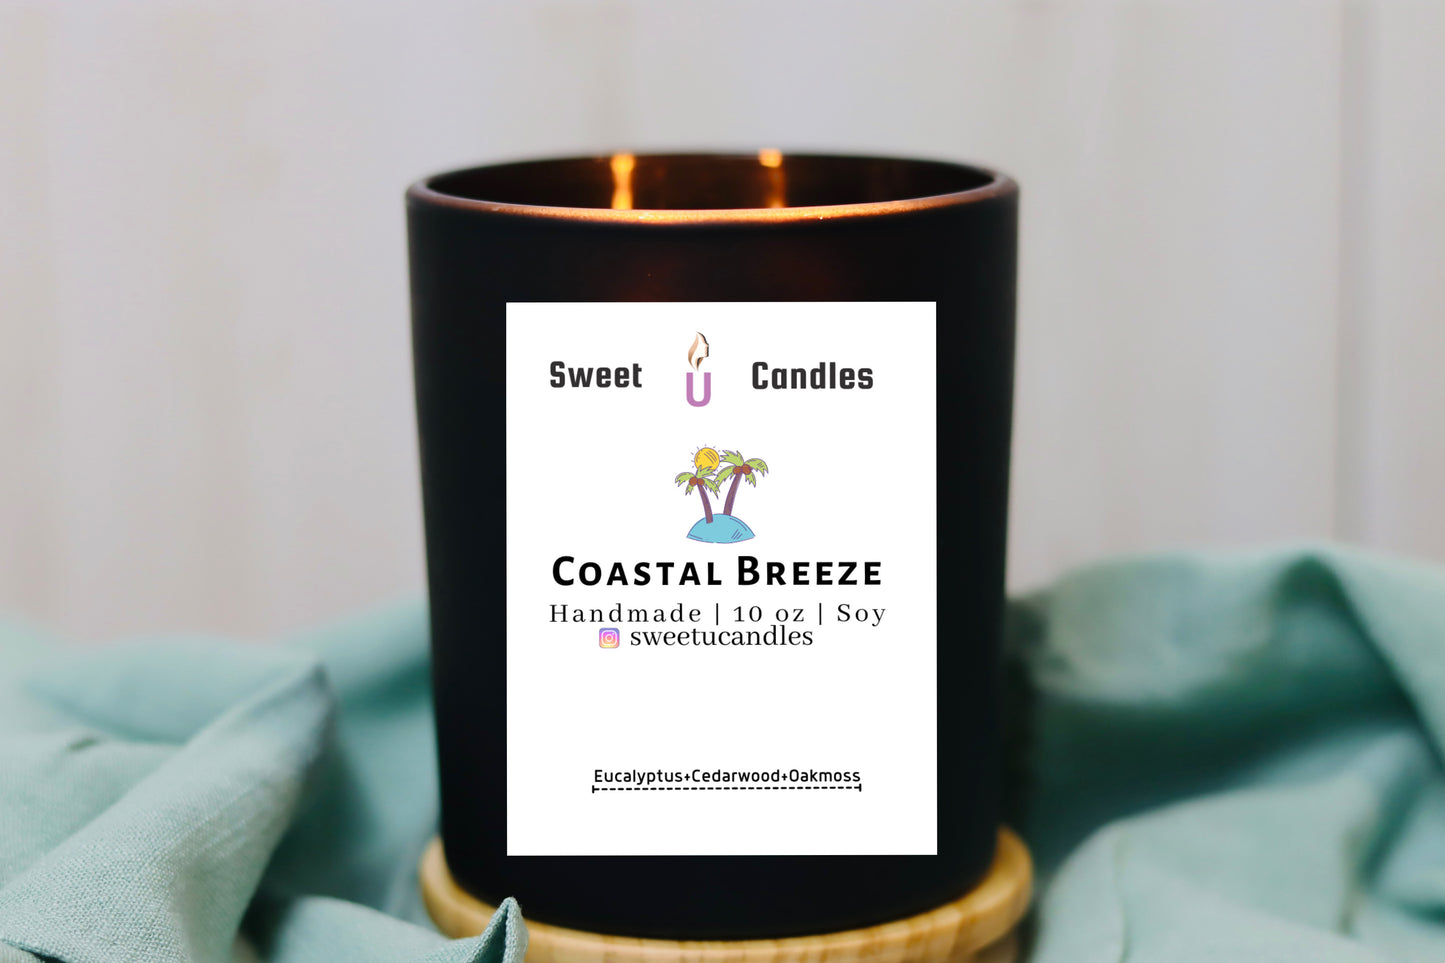 COASTAL BREEZE - Sweet U Candles 